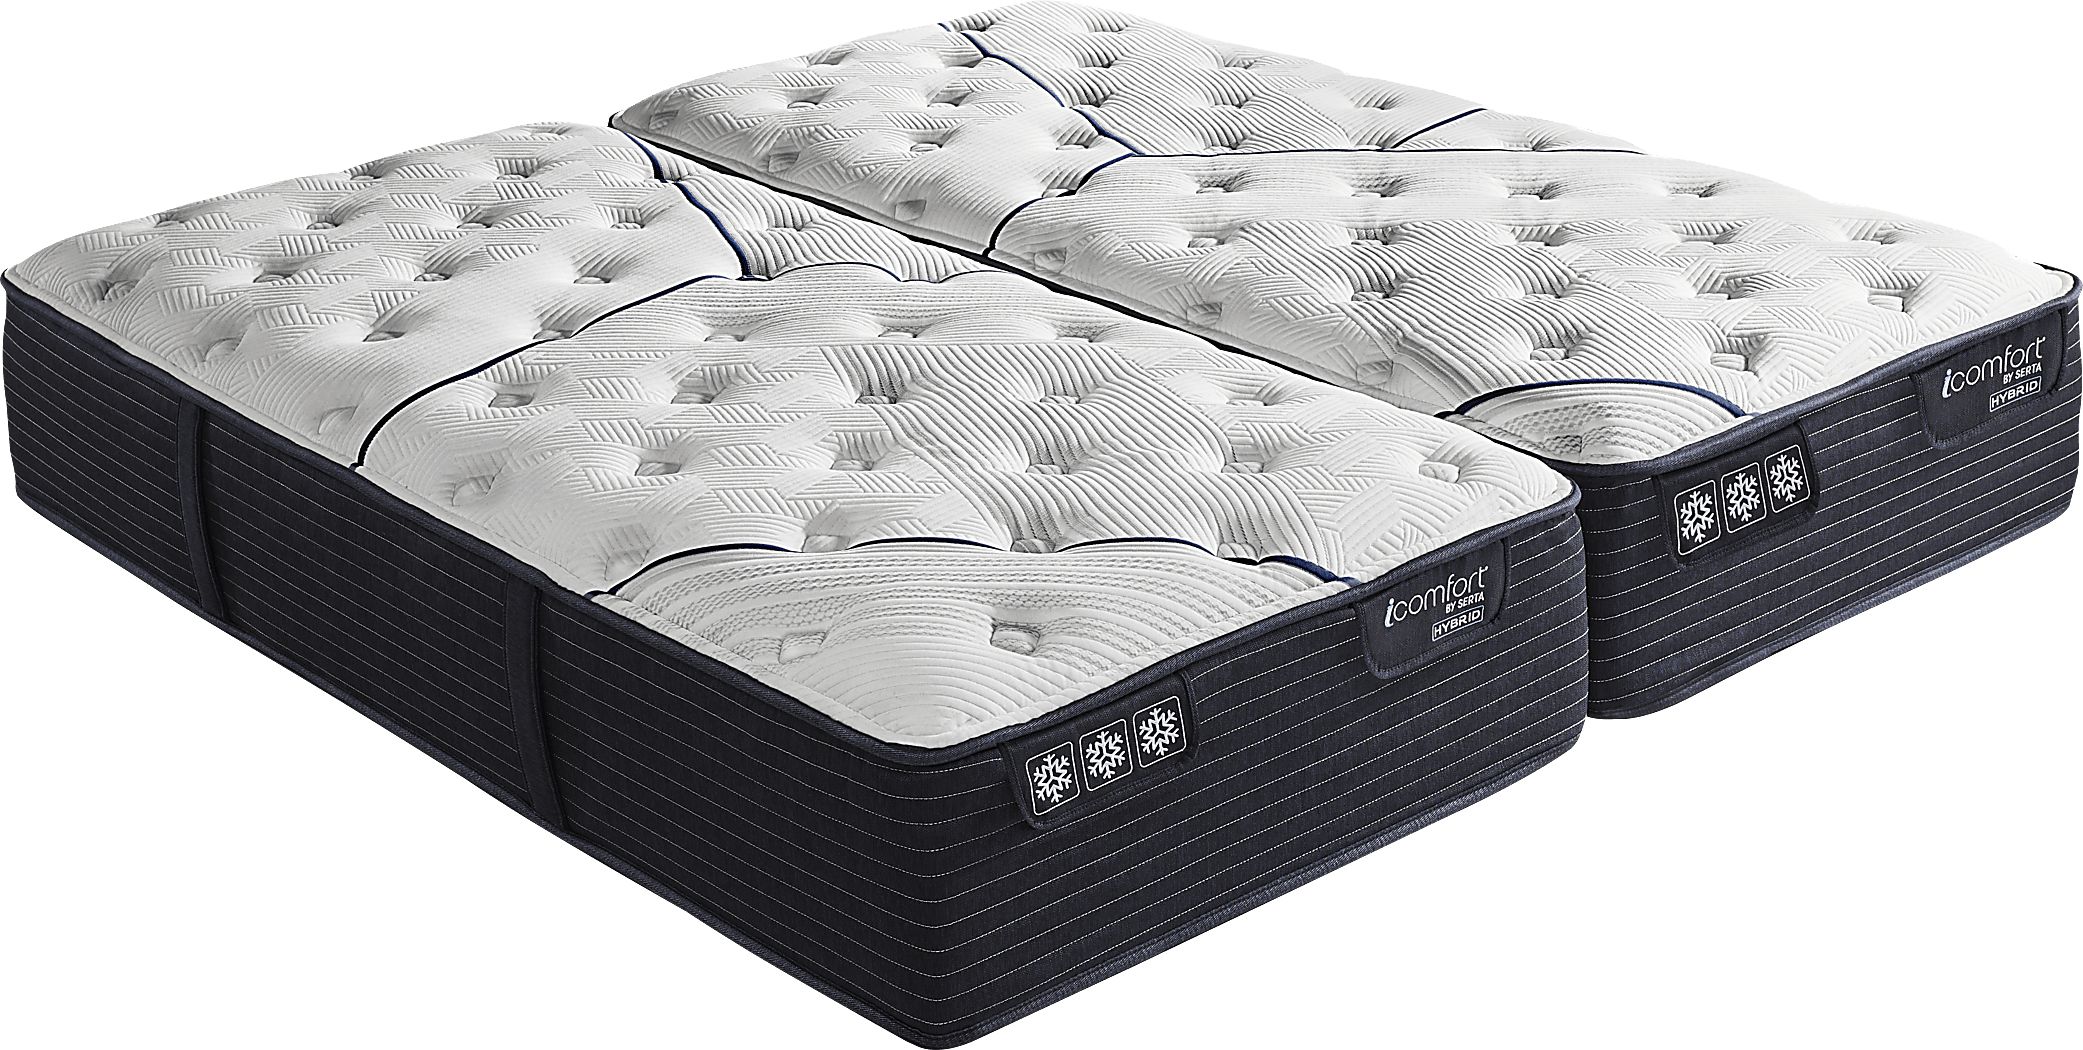 king mattresses for sale franklin tn